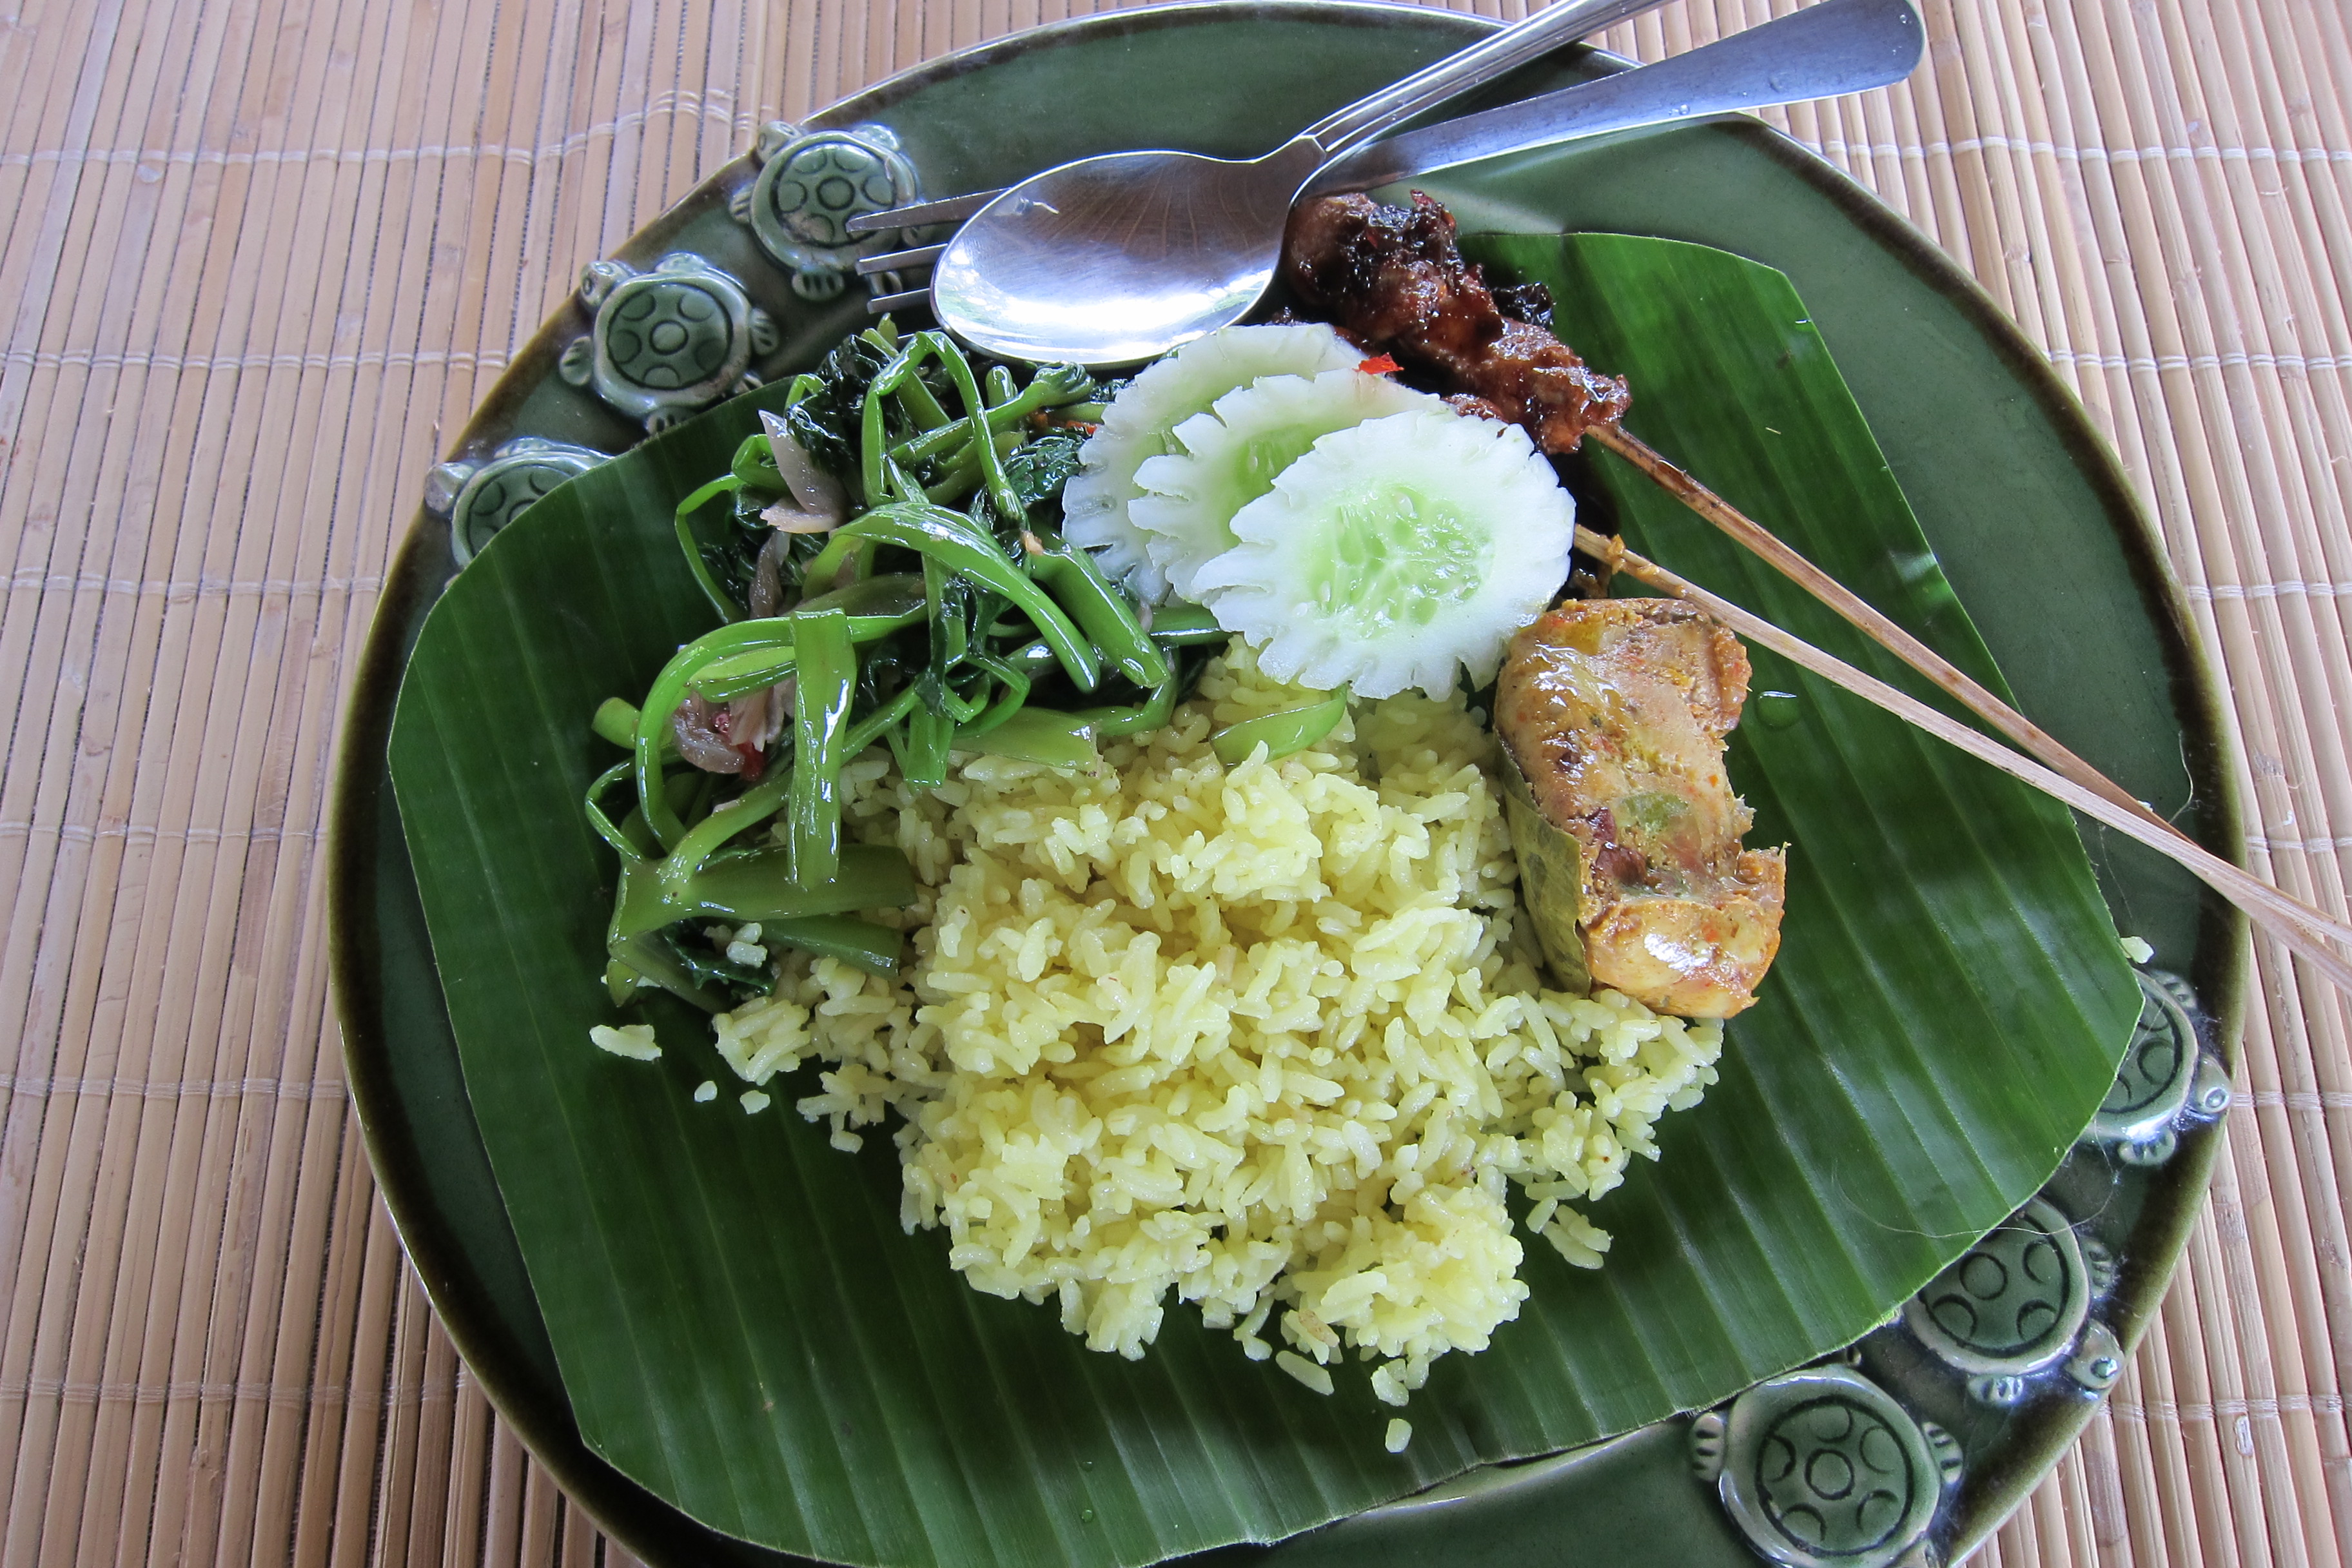 Ubud Cooking Class The Best Way To Taste Bali Culture - Kulture Kween